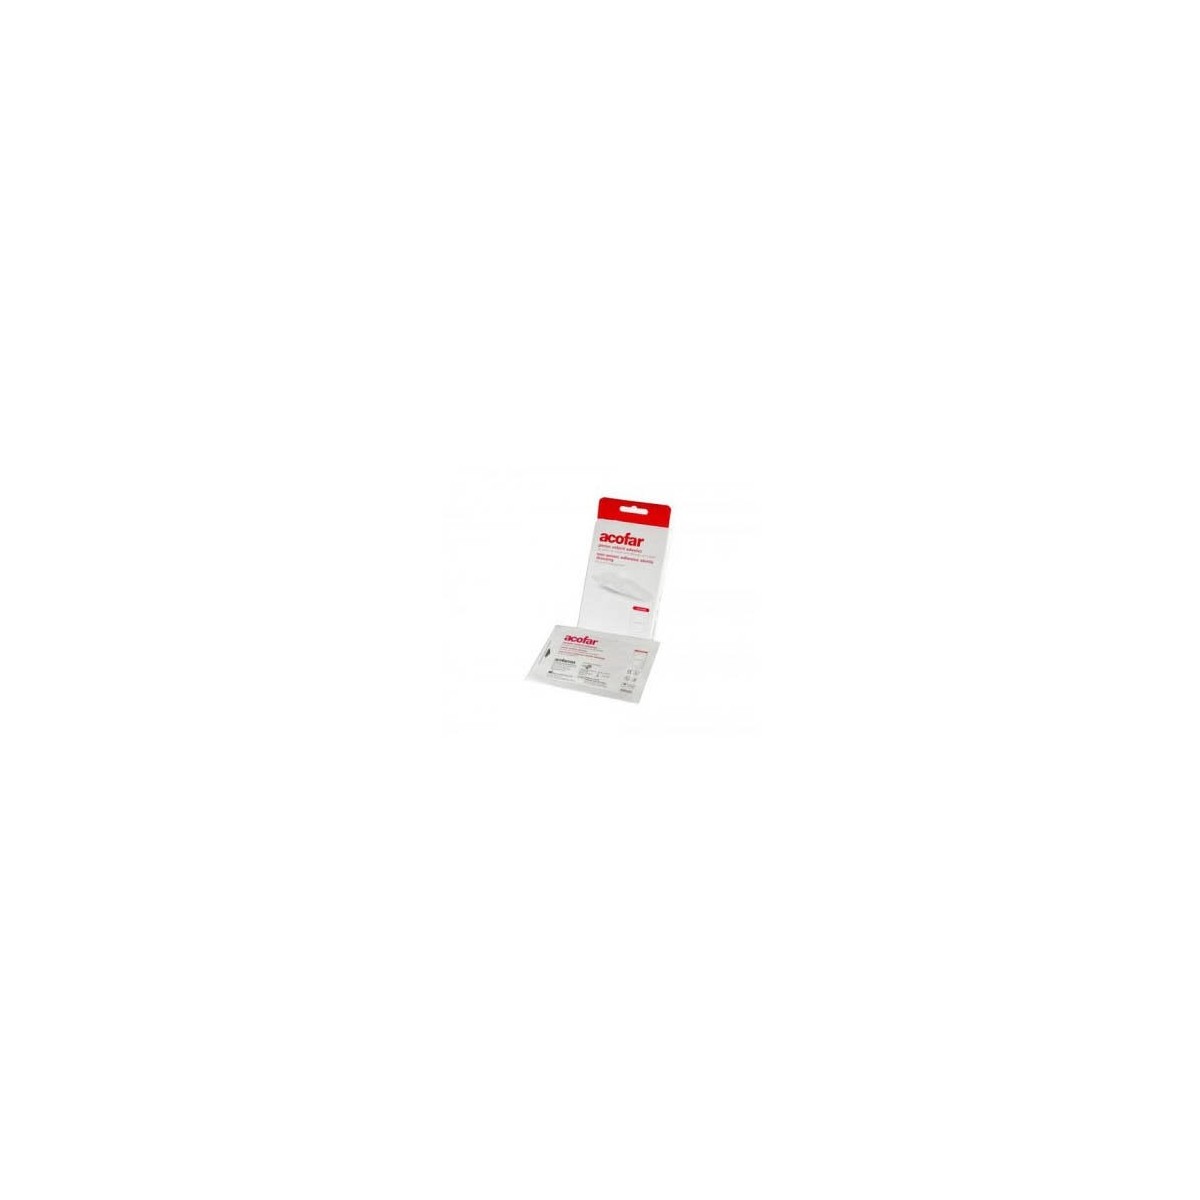 acofar-aposito-esteril-adhesivo-72-x-5cm-10-unidades